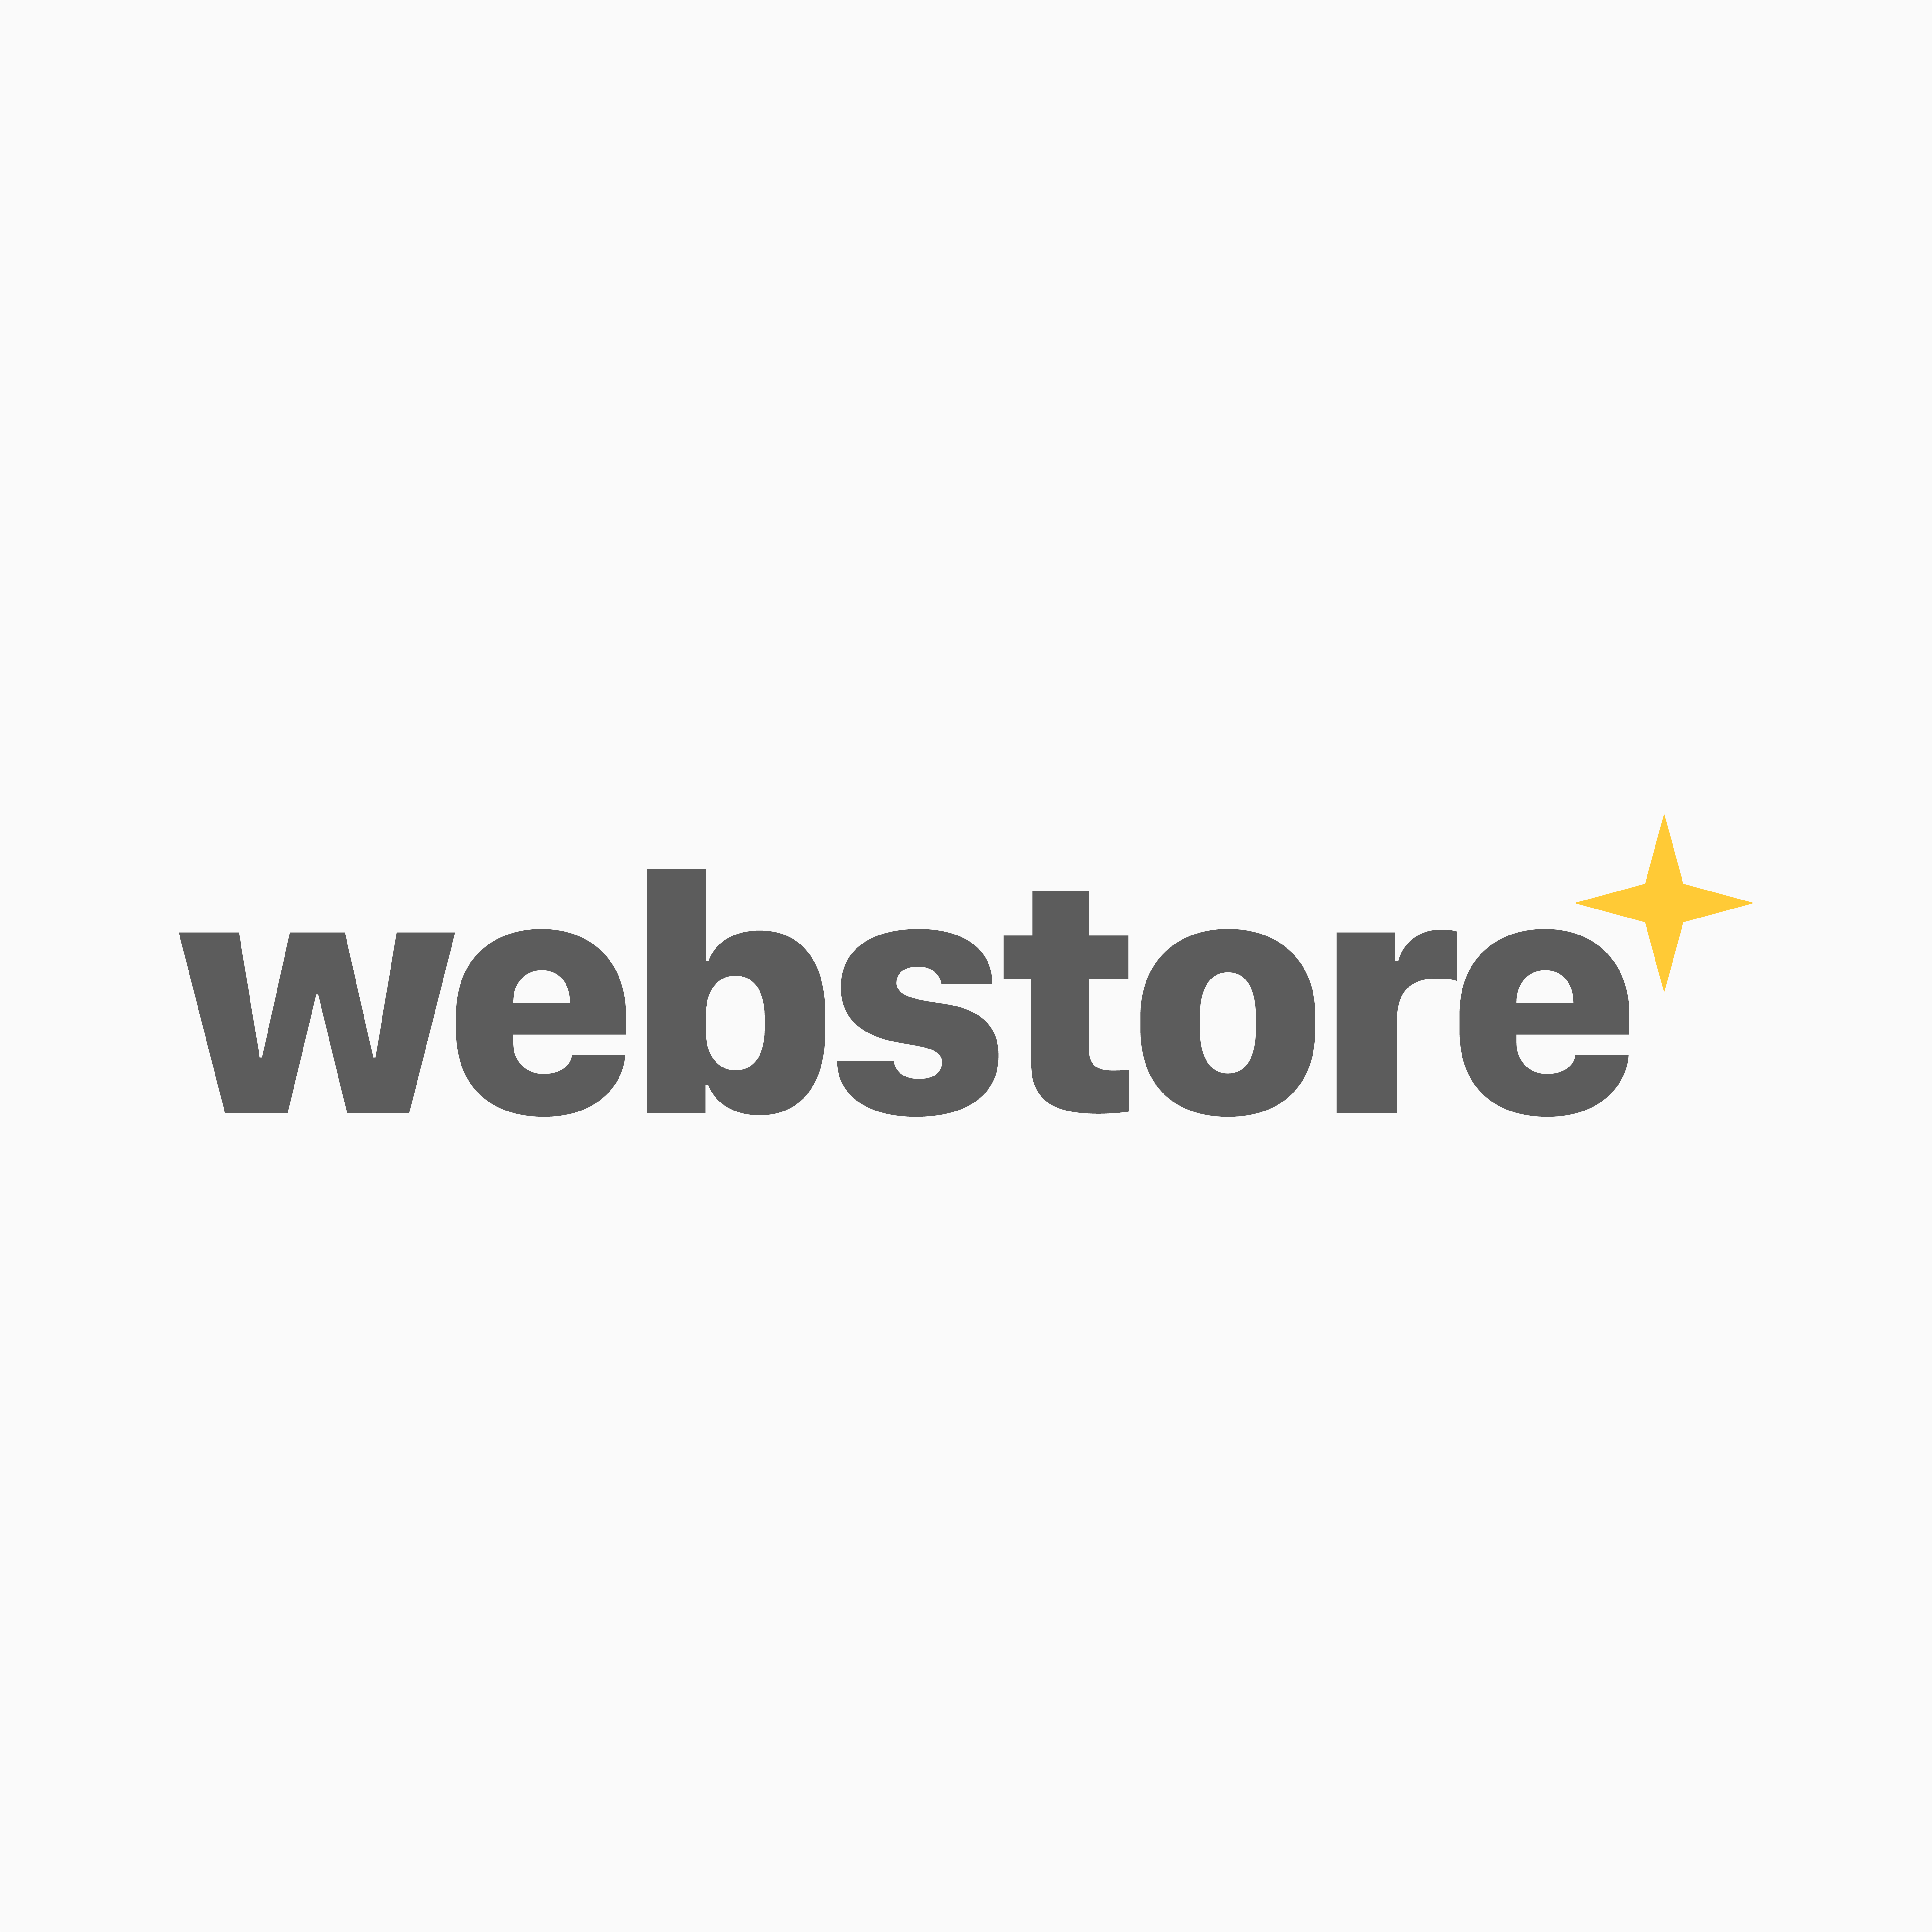 Anamo Webstore wordmark (logotype)